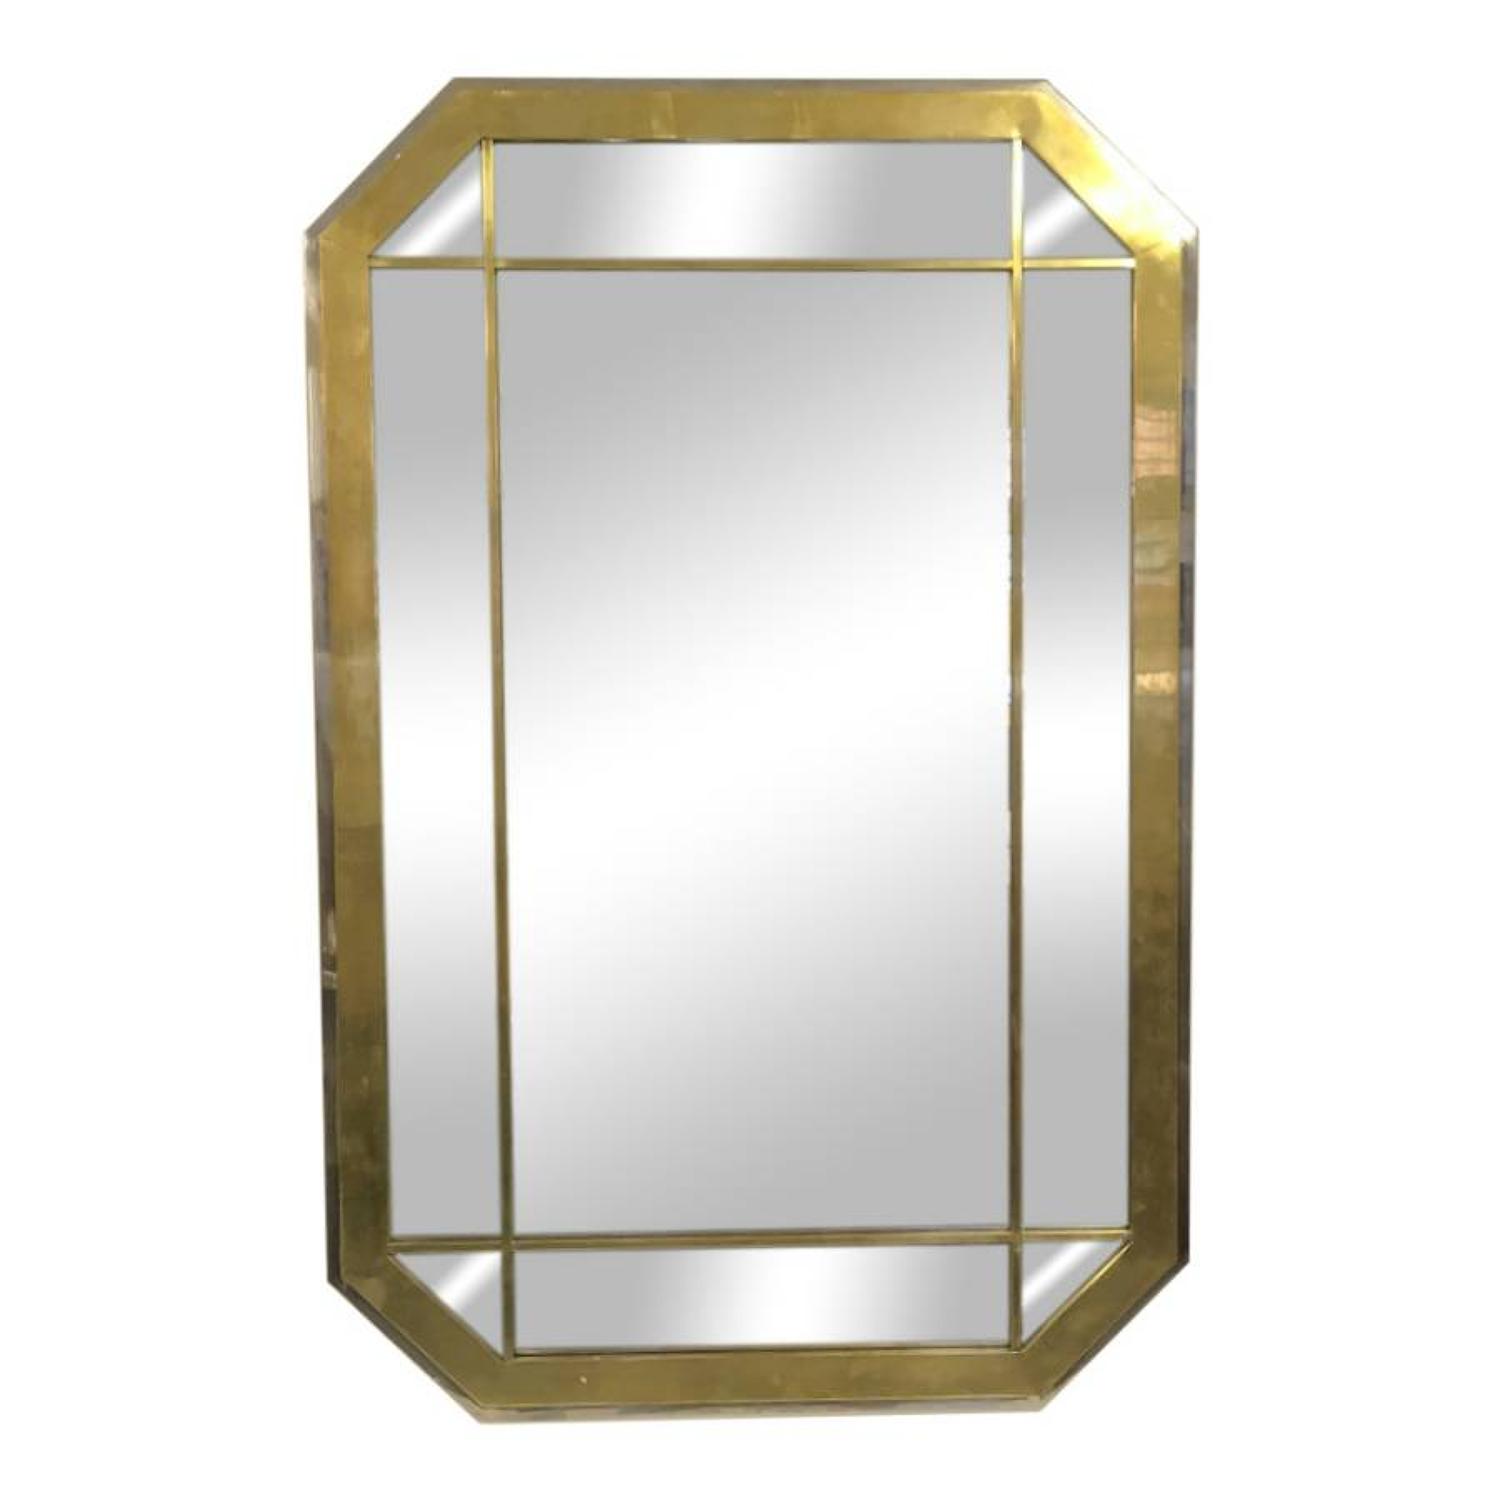 1970s chrome and brass mirror by Romeo Rega